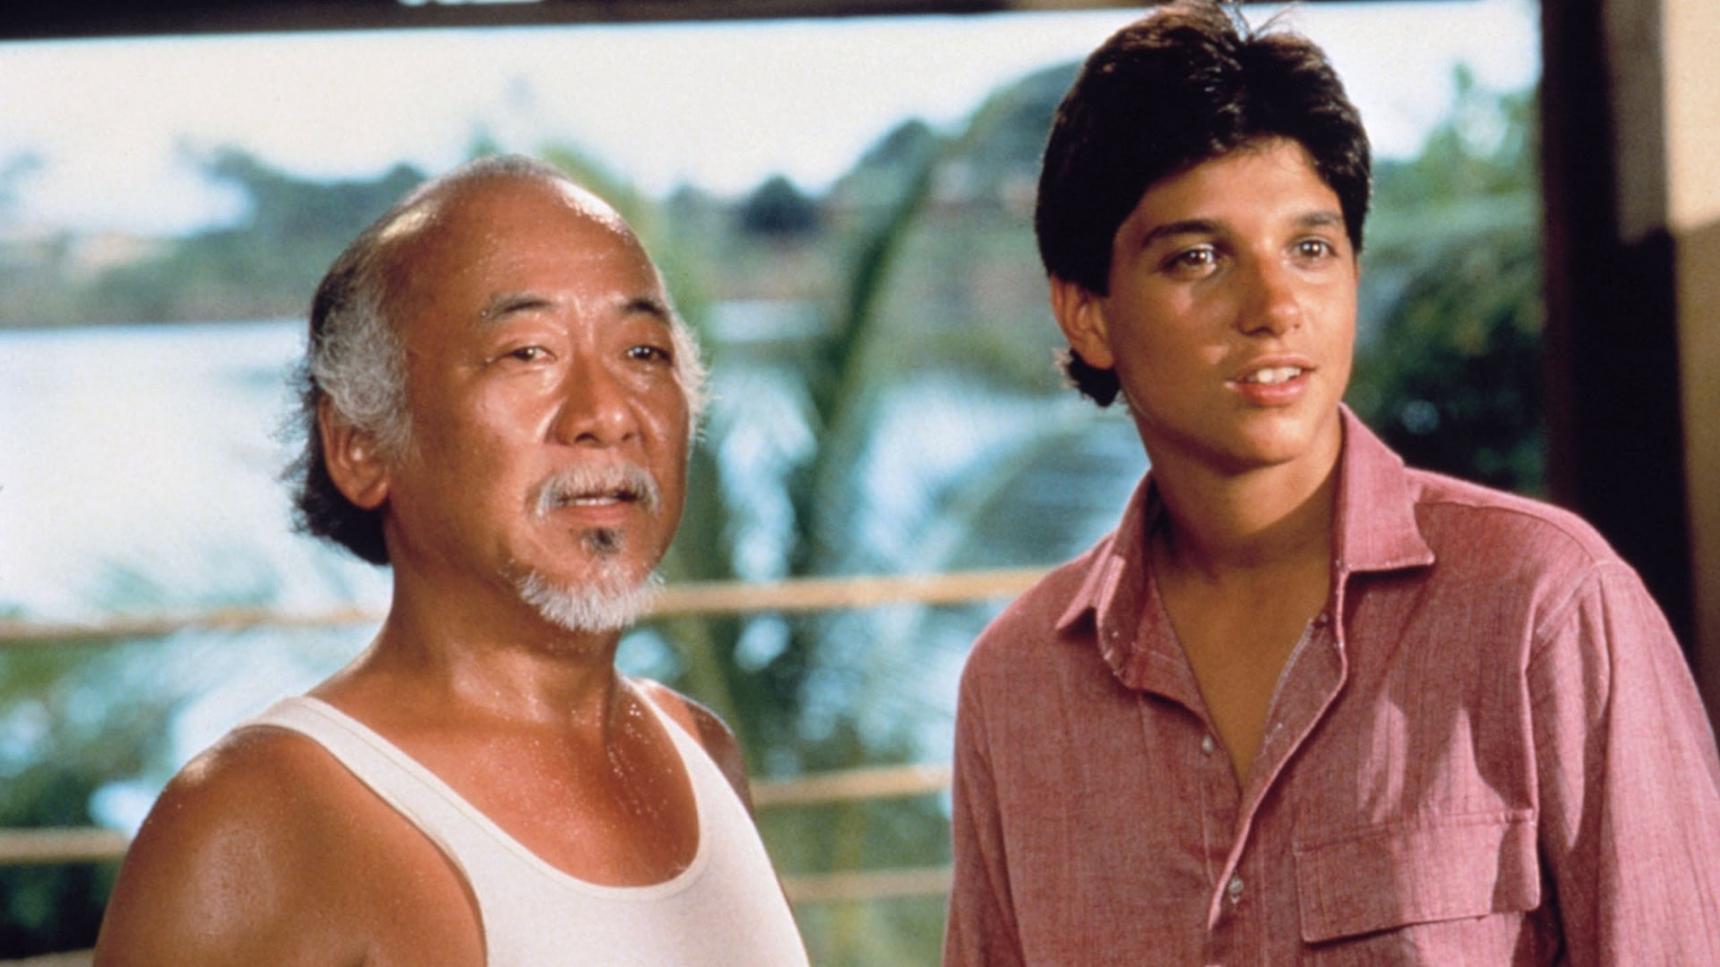 Fondo de pantalla de la película Karate Kid II, la historia continúa en PELISPEDIA gratis